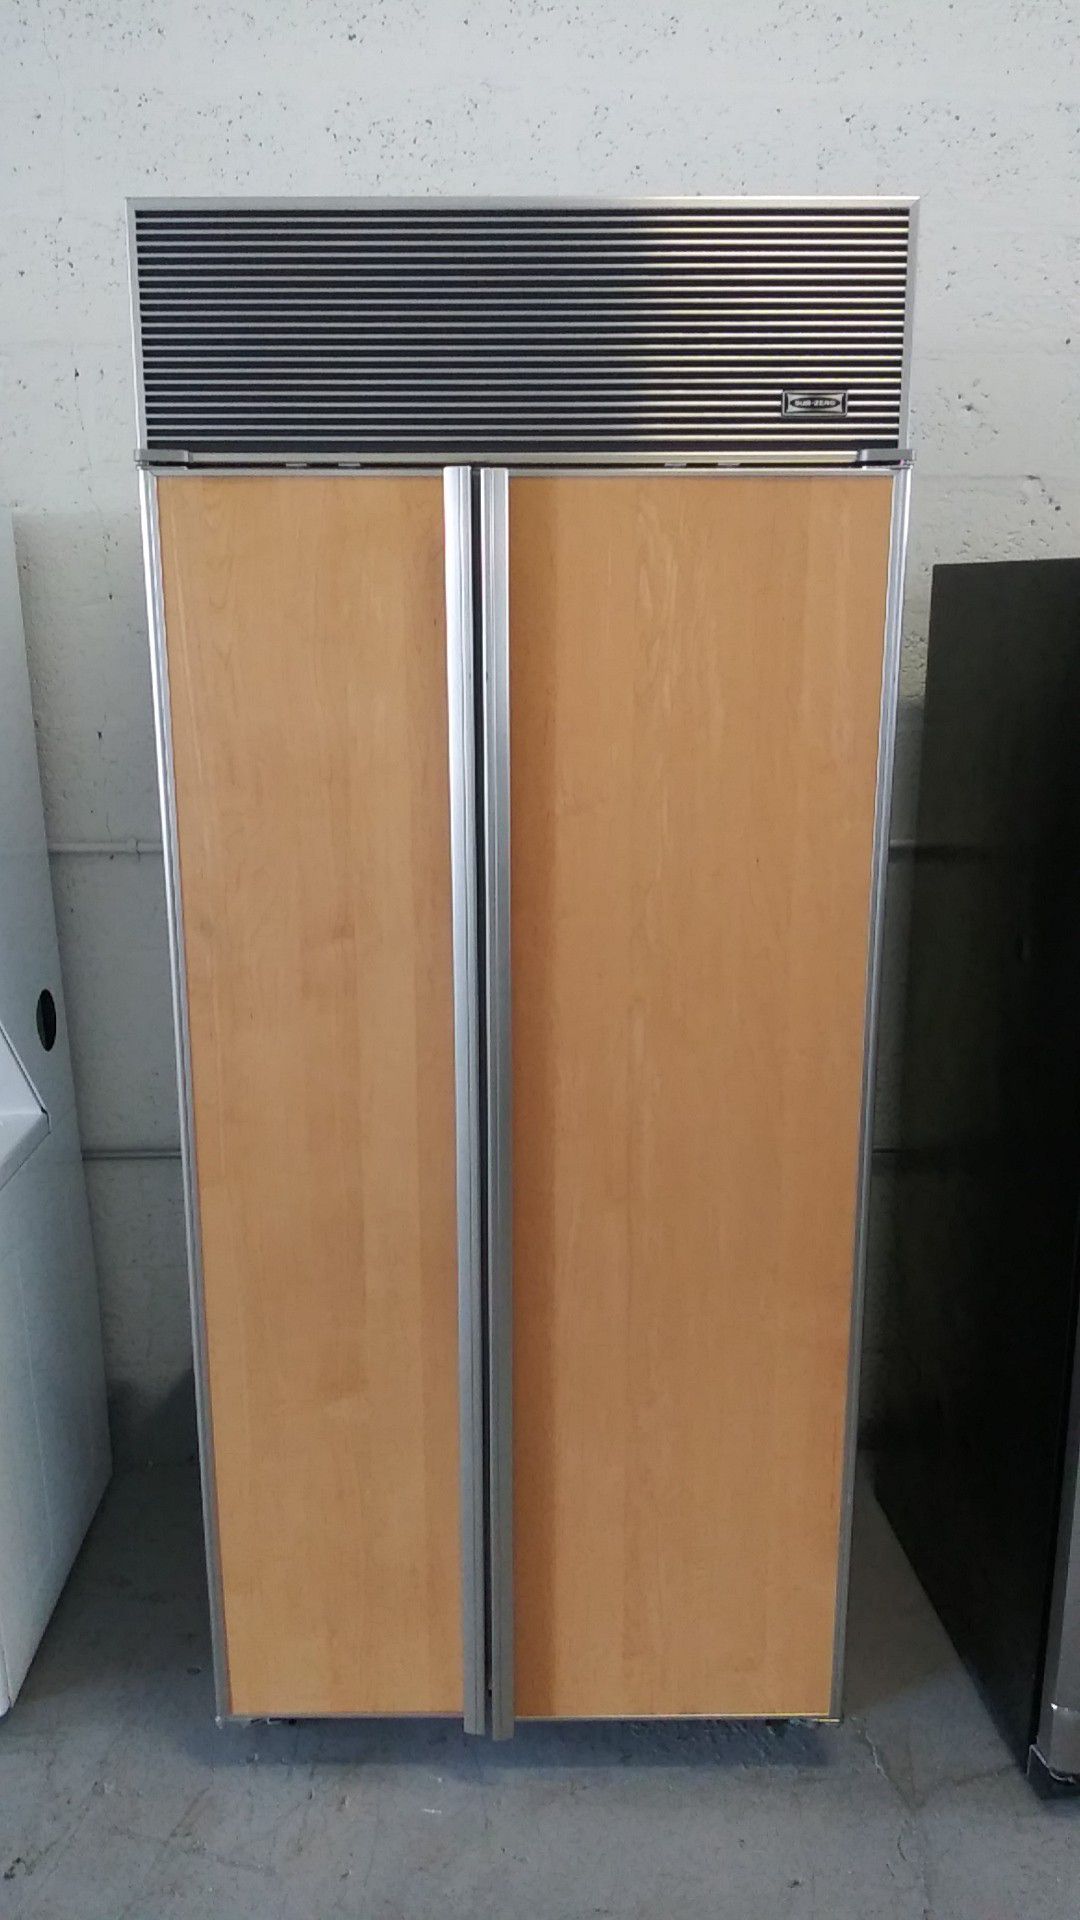 Sub-zero 561 refrigerator